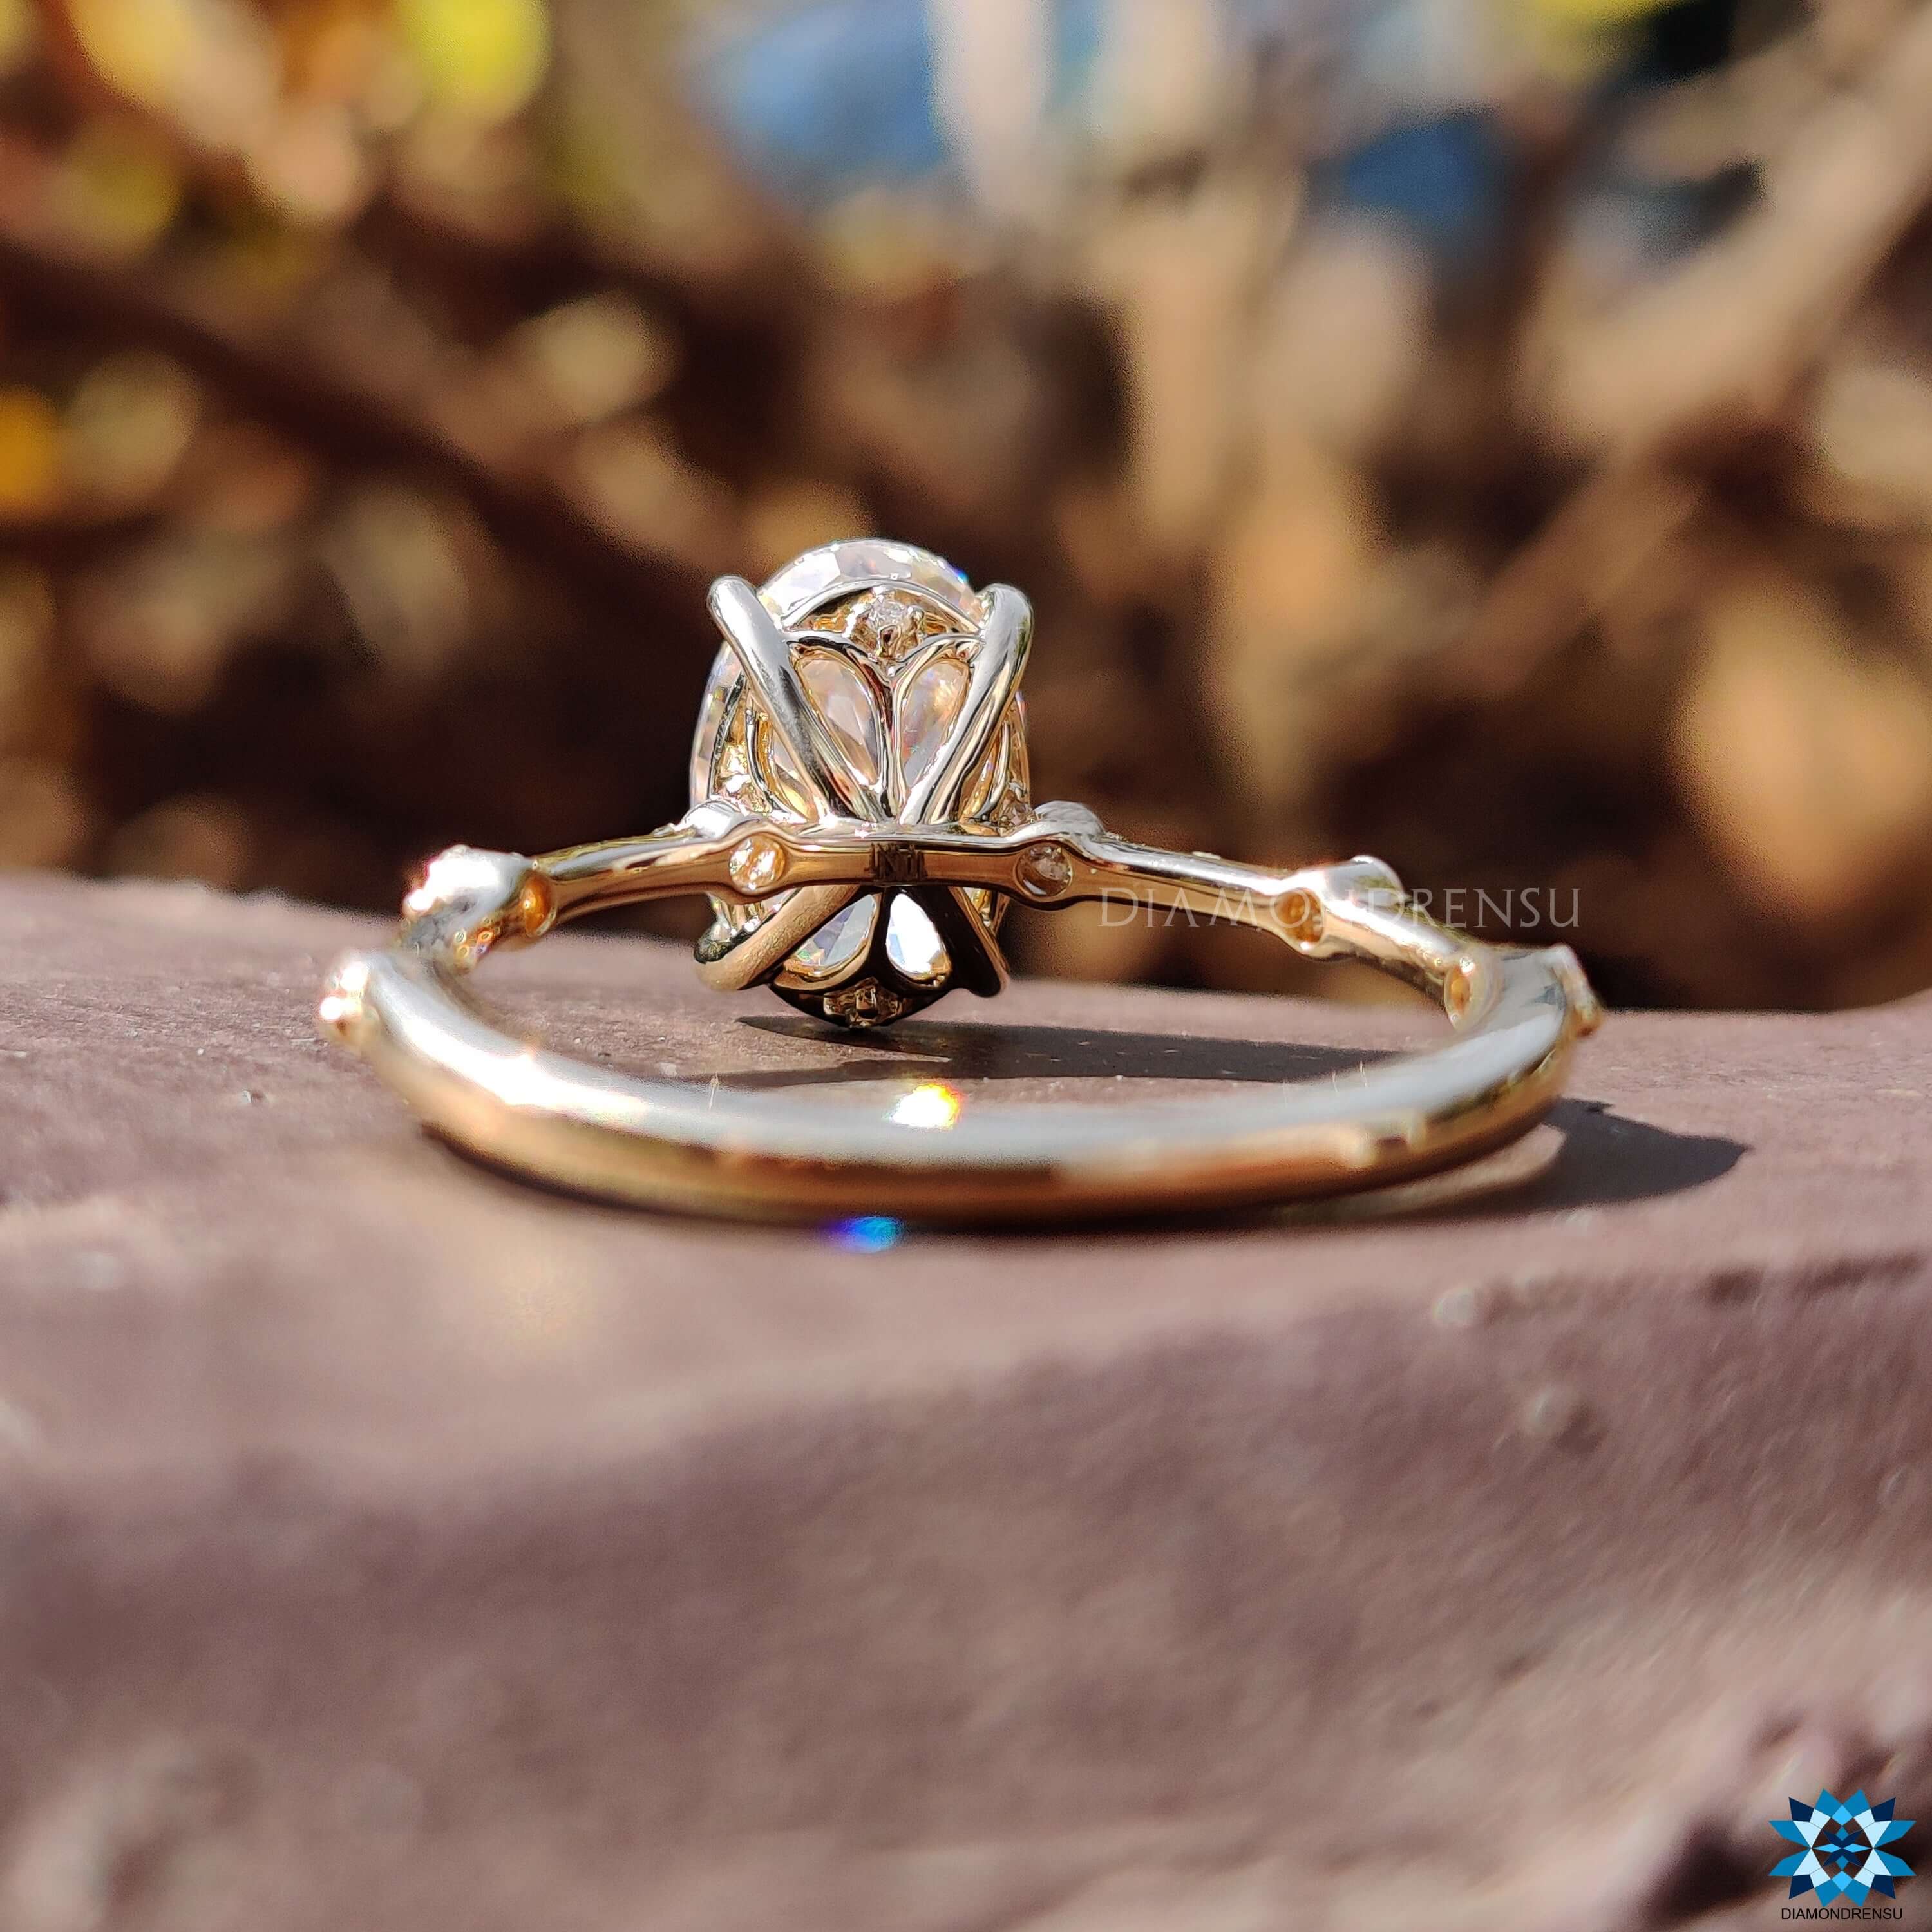 oval cut moissanite engagement ring - diamondrensu